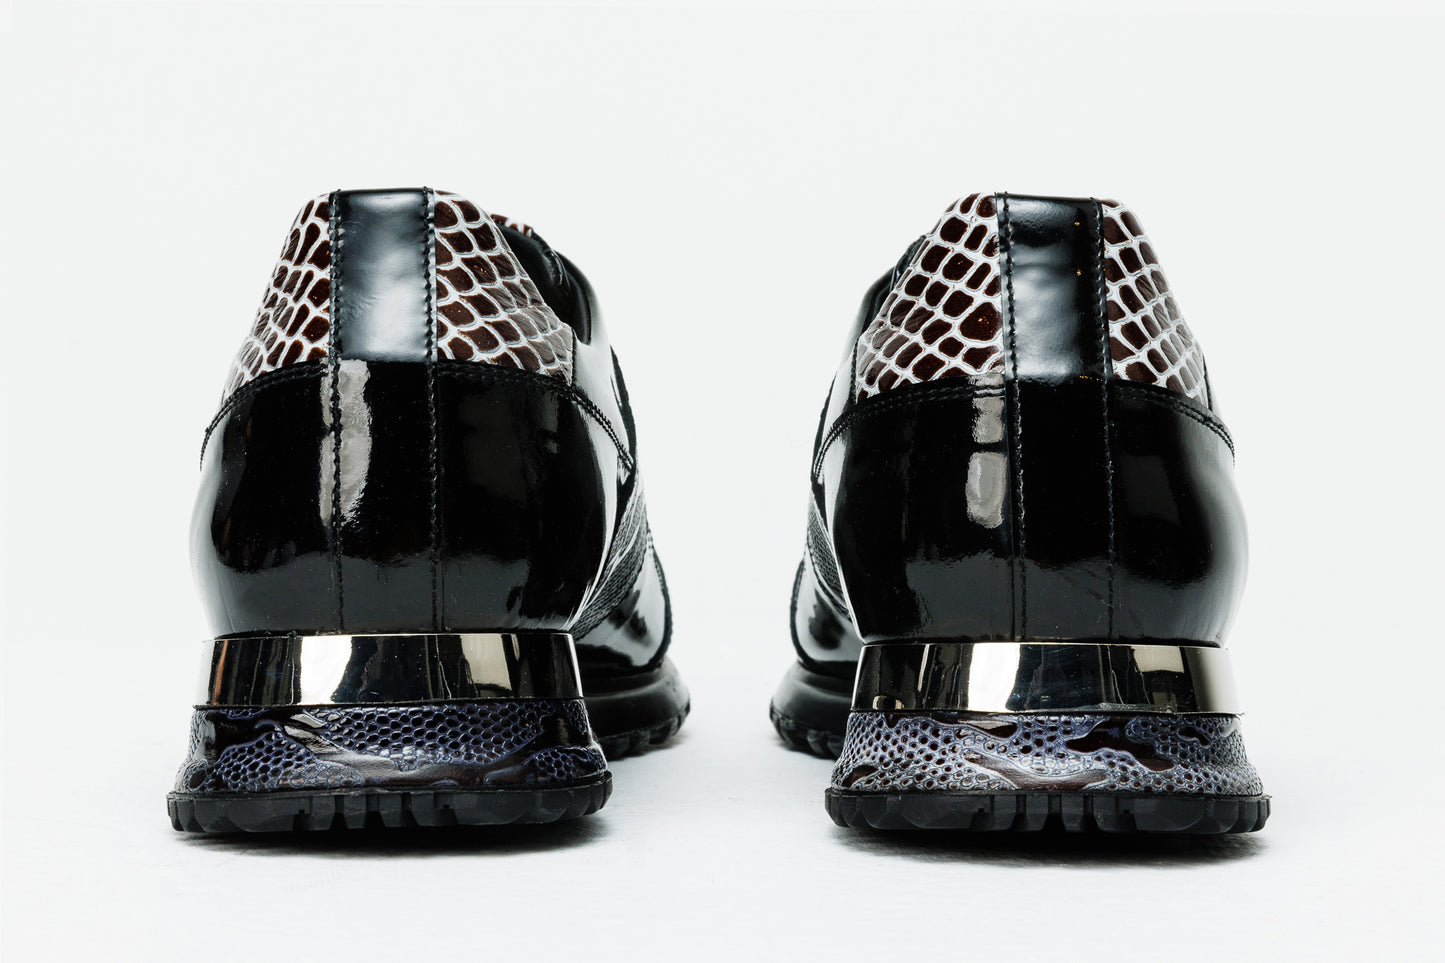 The Milano Snk Black & White Leather Men Sneaker